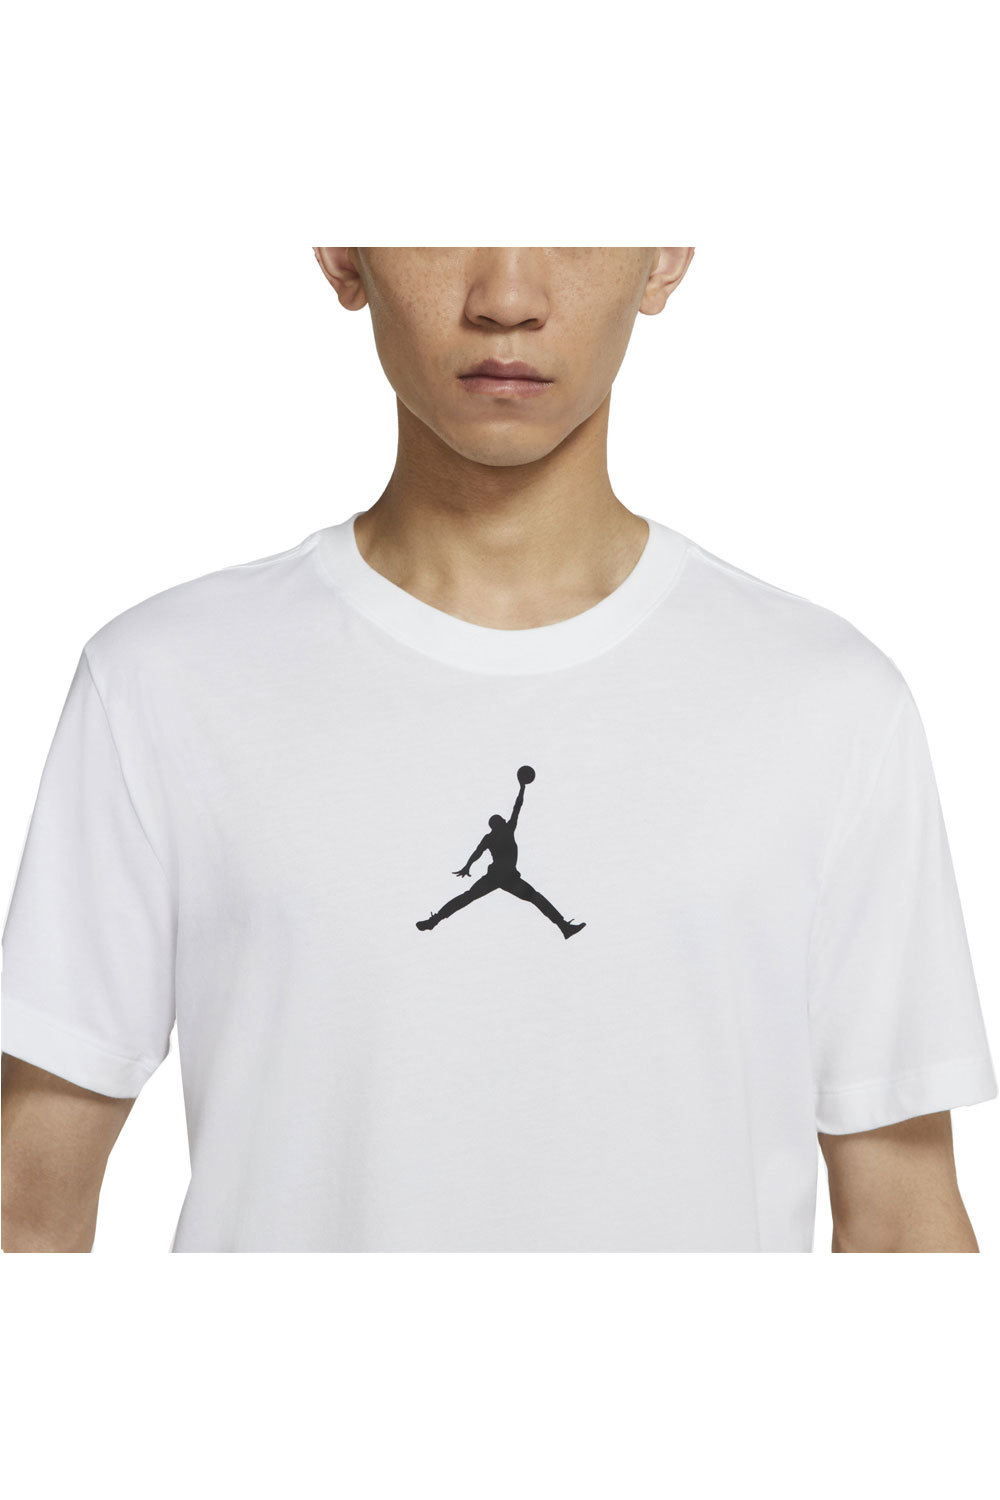 Nike camiseta manga corta hombre JORDAN JUMPMAN 4 vista detalle